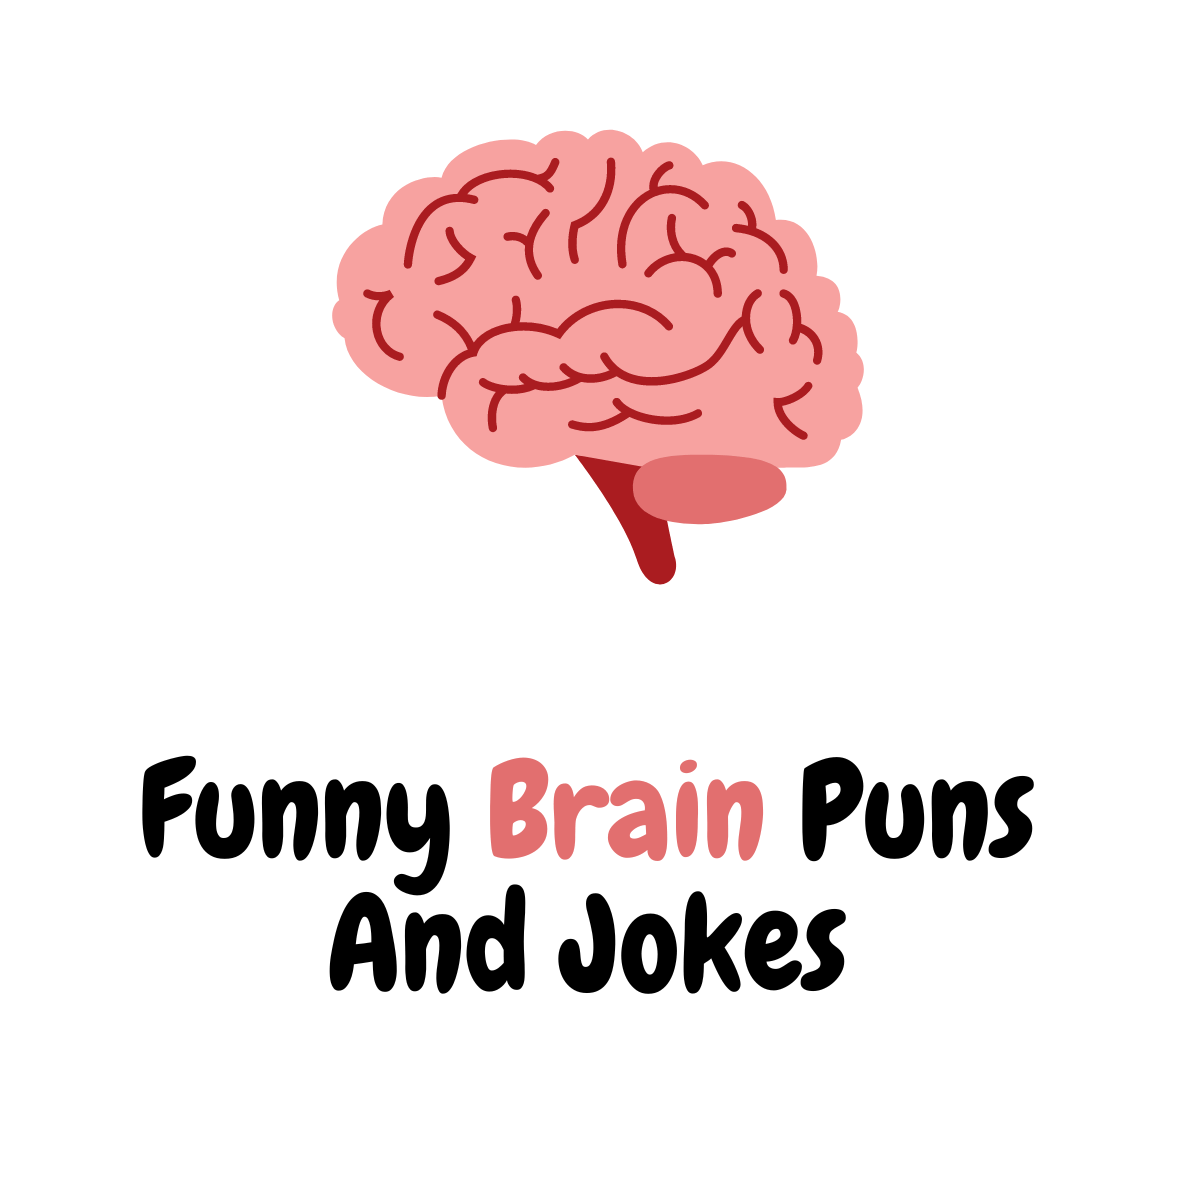 Funny Brain Puns And Jokes